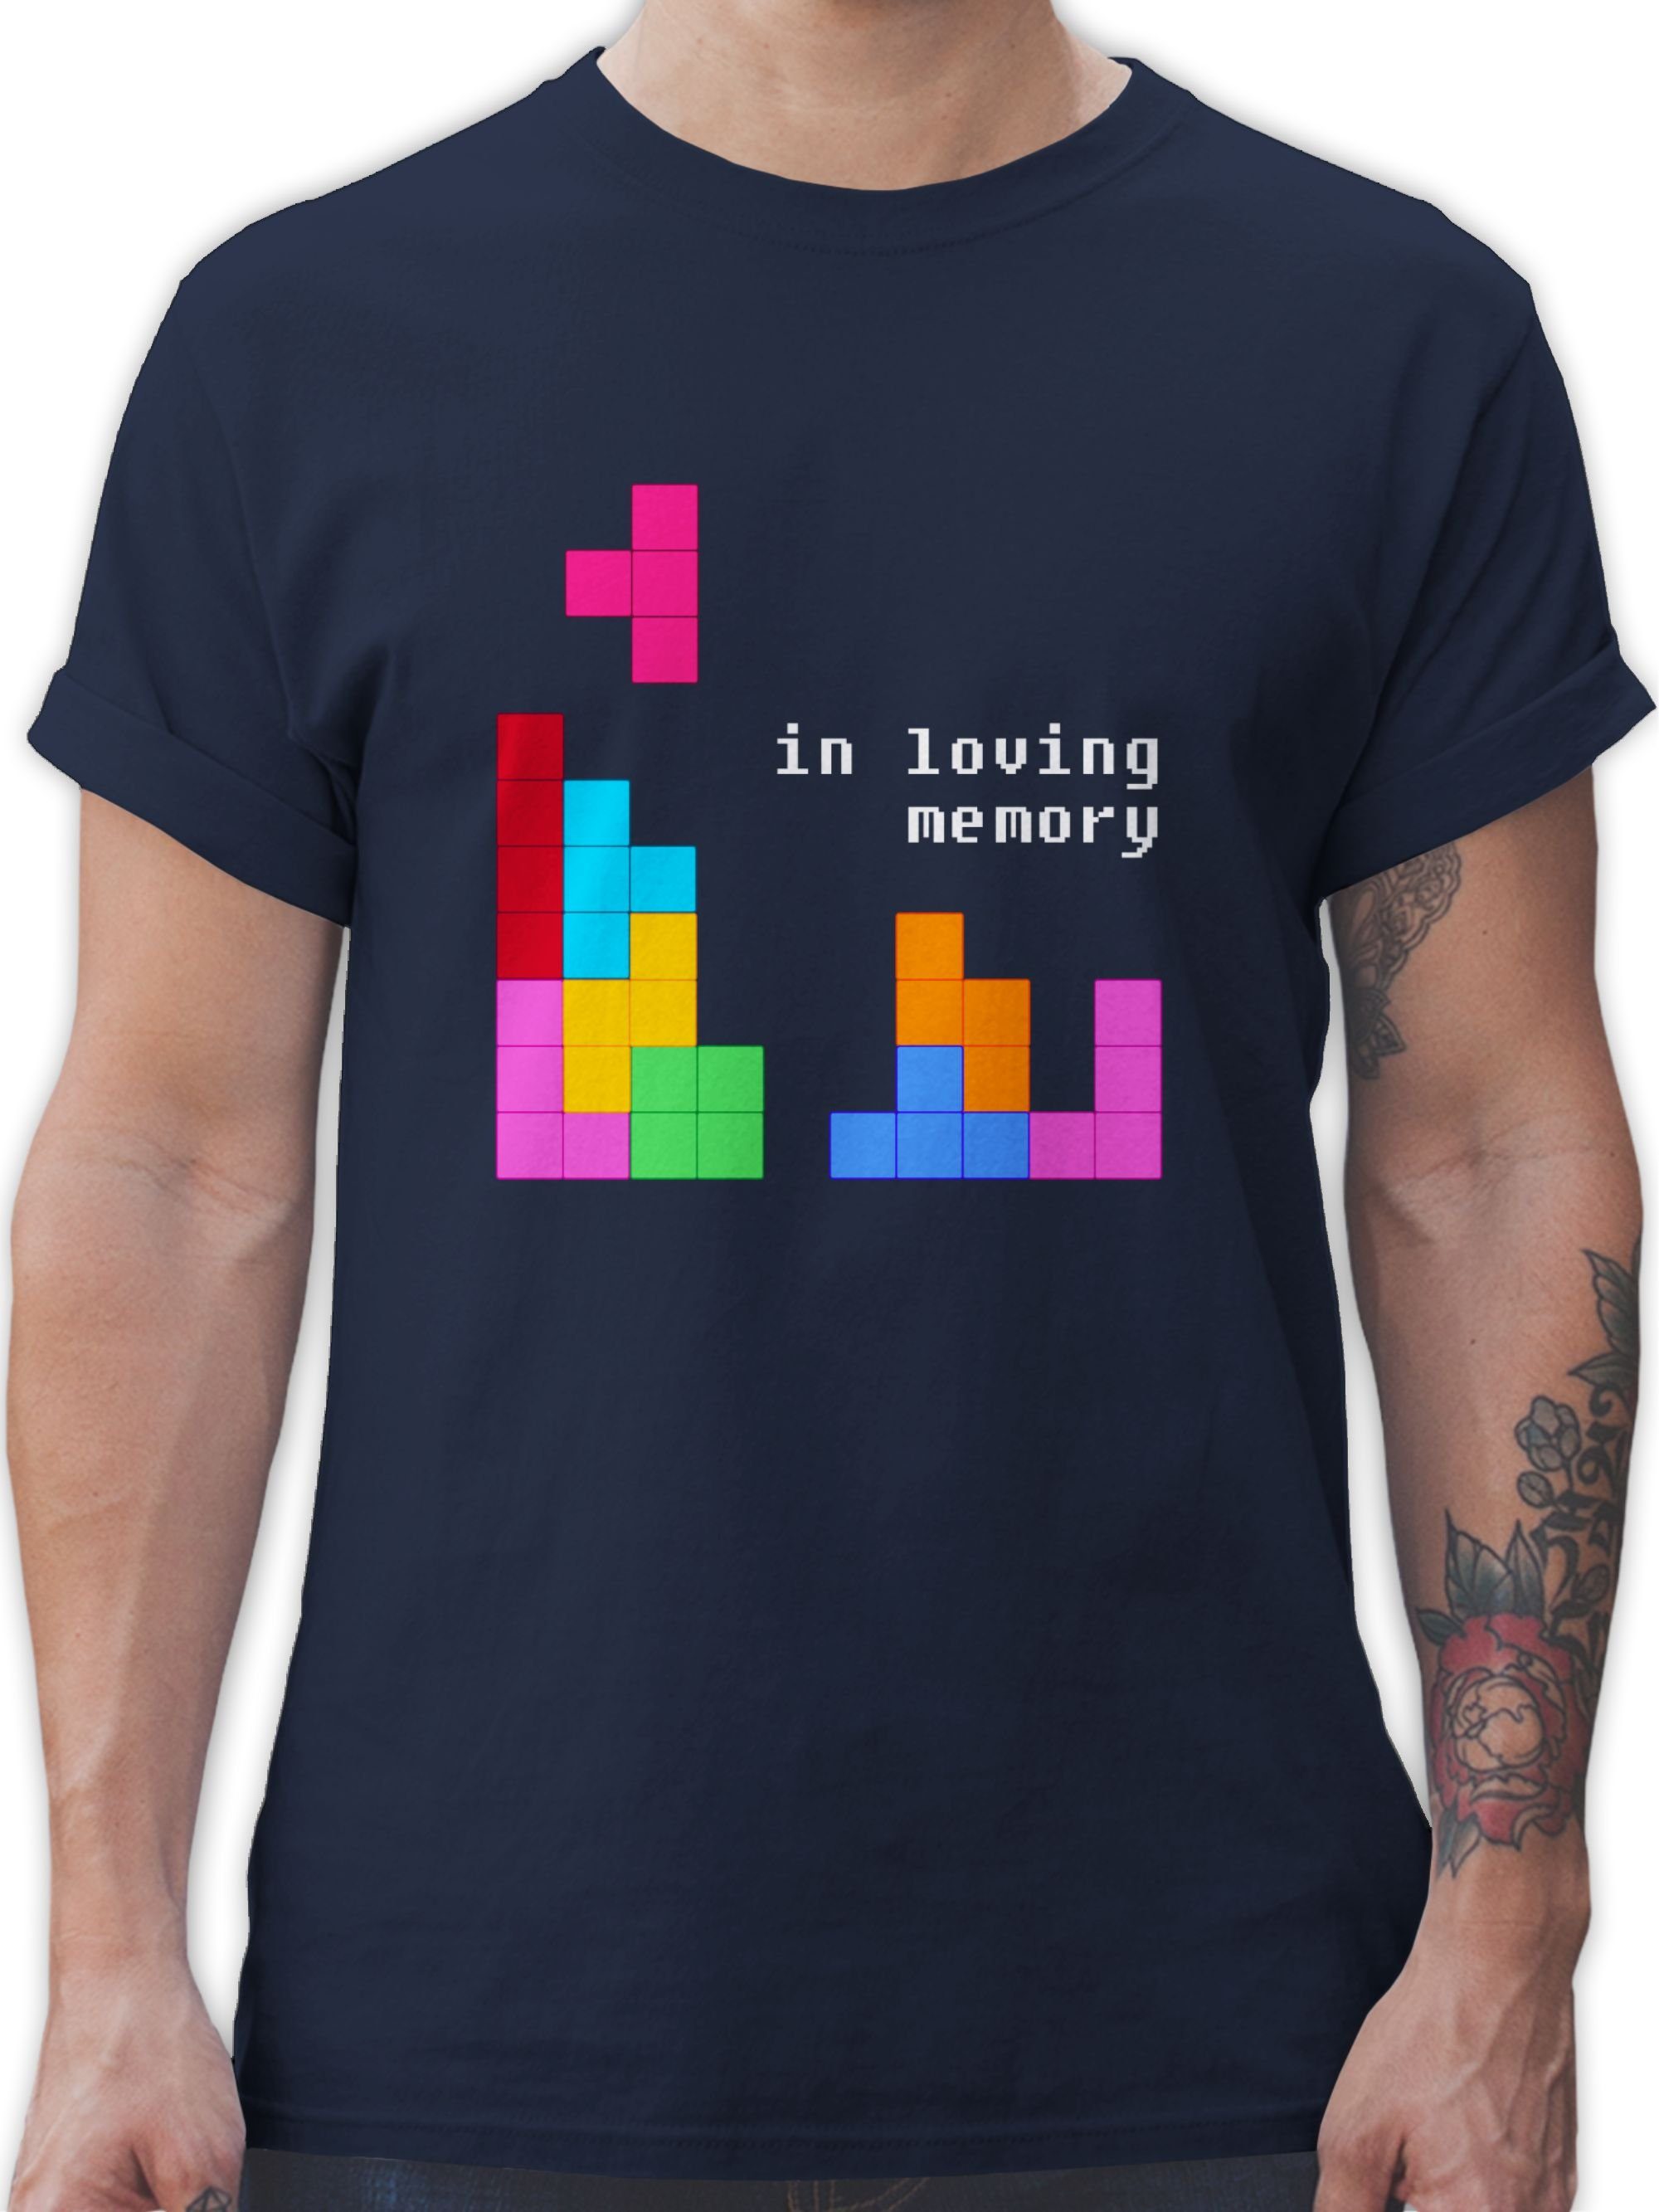 Shirtracer T-Shirt Tetris in loving memory Nerd Geschenke 2 Navy Blau